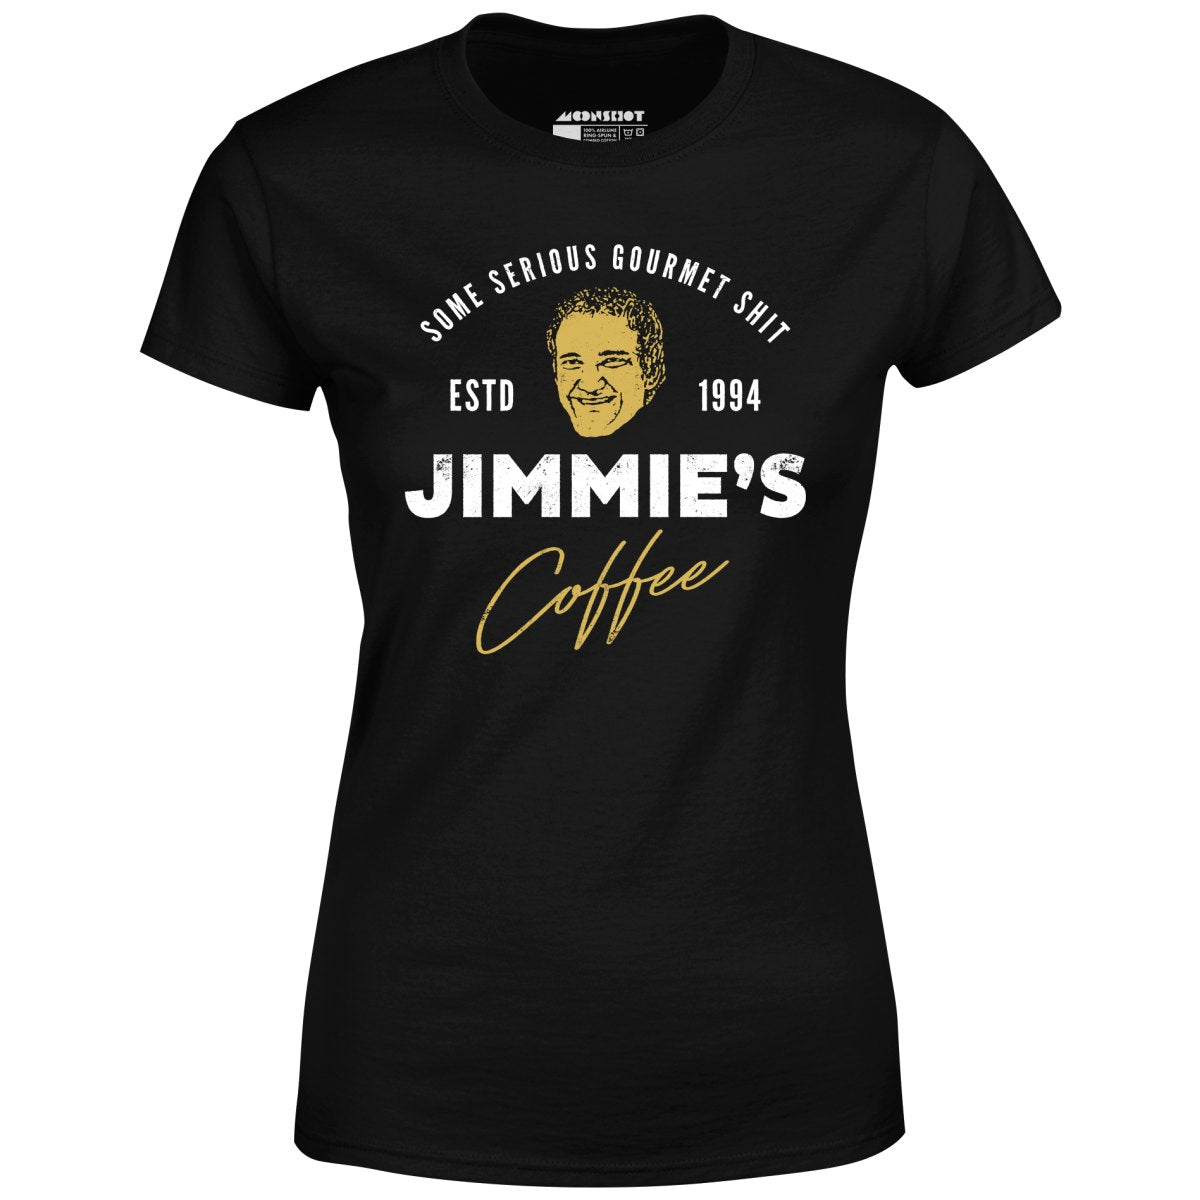 Jimmie's Coffee - Women's T-Shirt